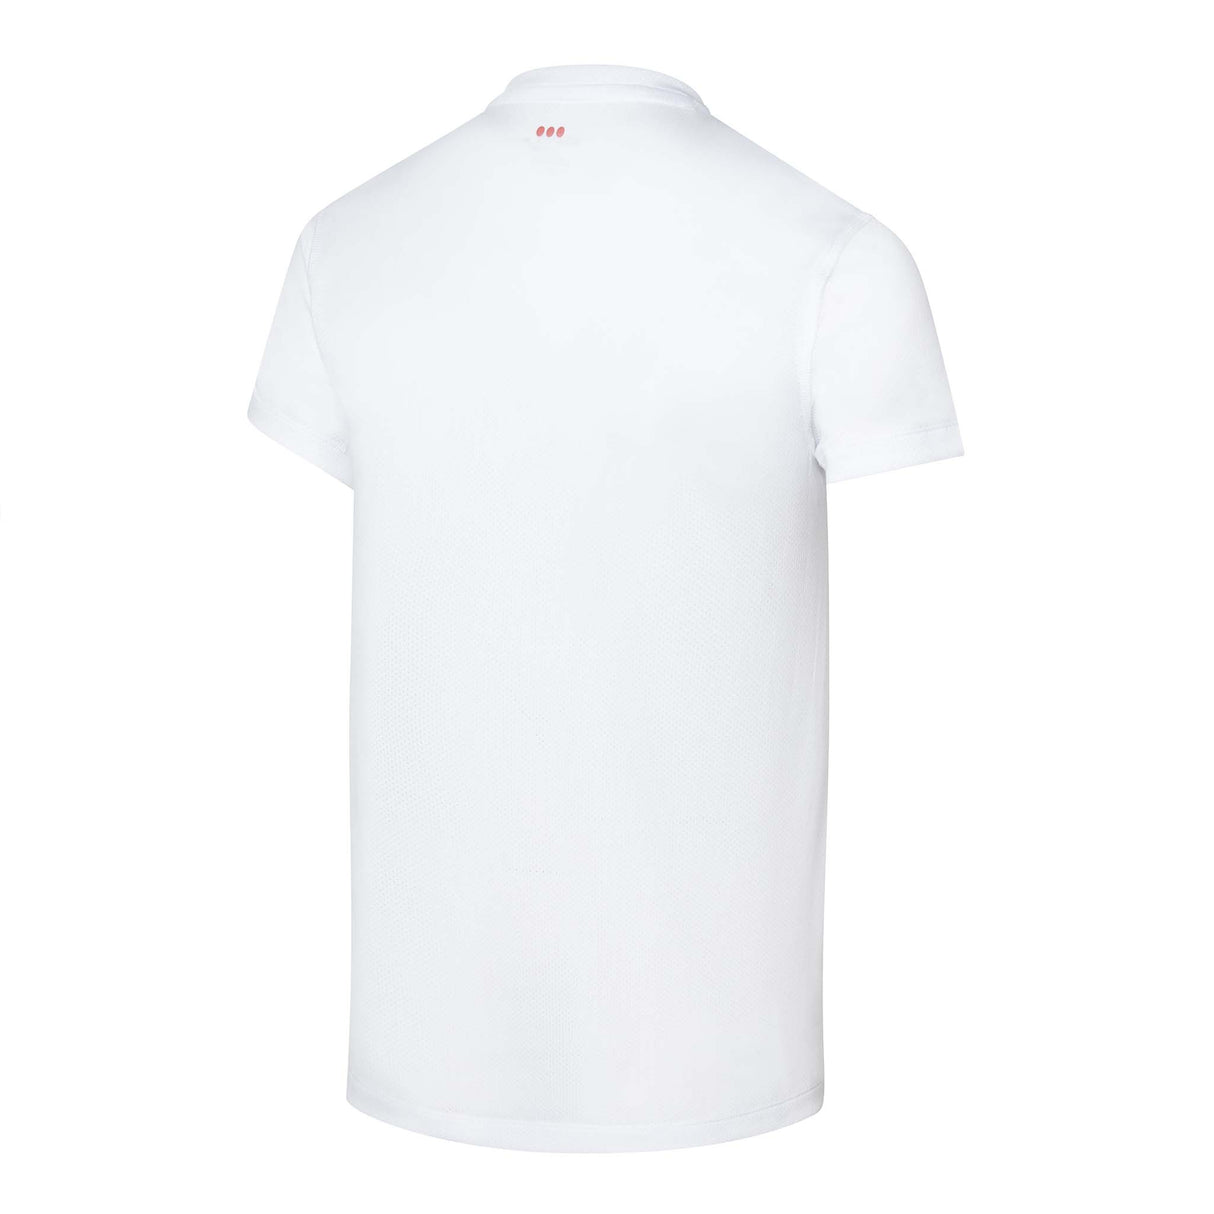 Saucony Stopwatch Short Sleeve t-shirt de course blanc femme dos